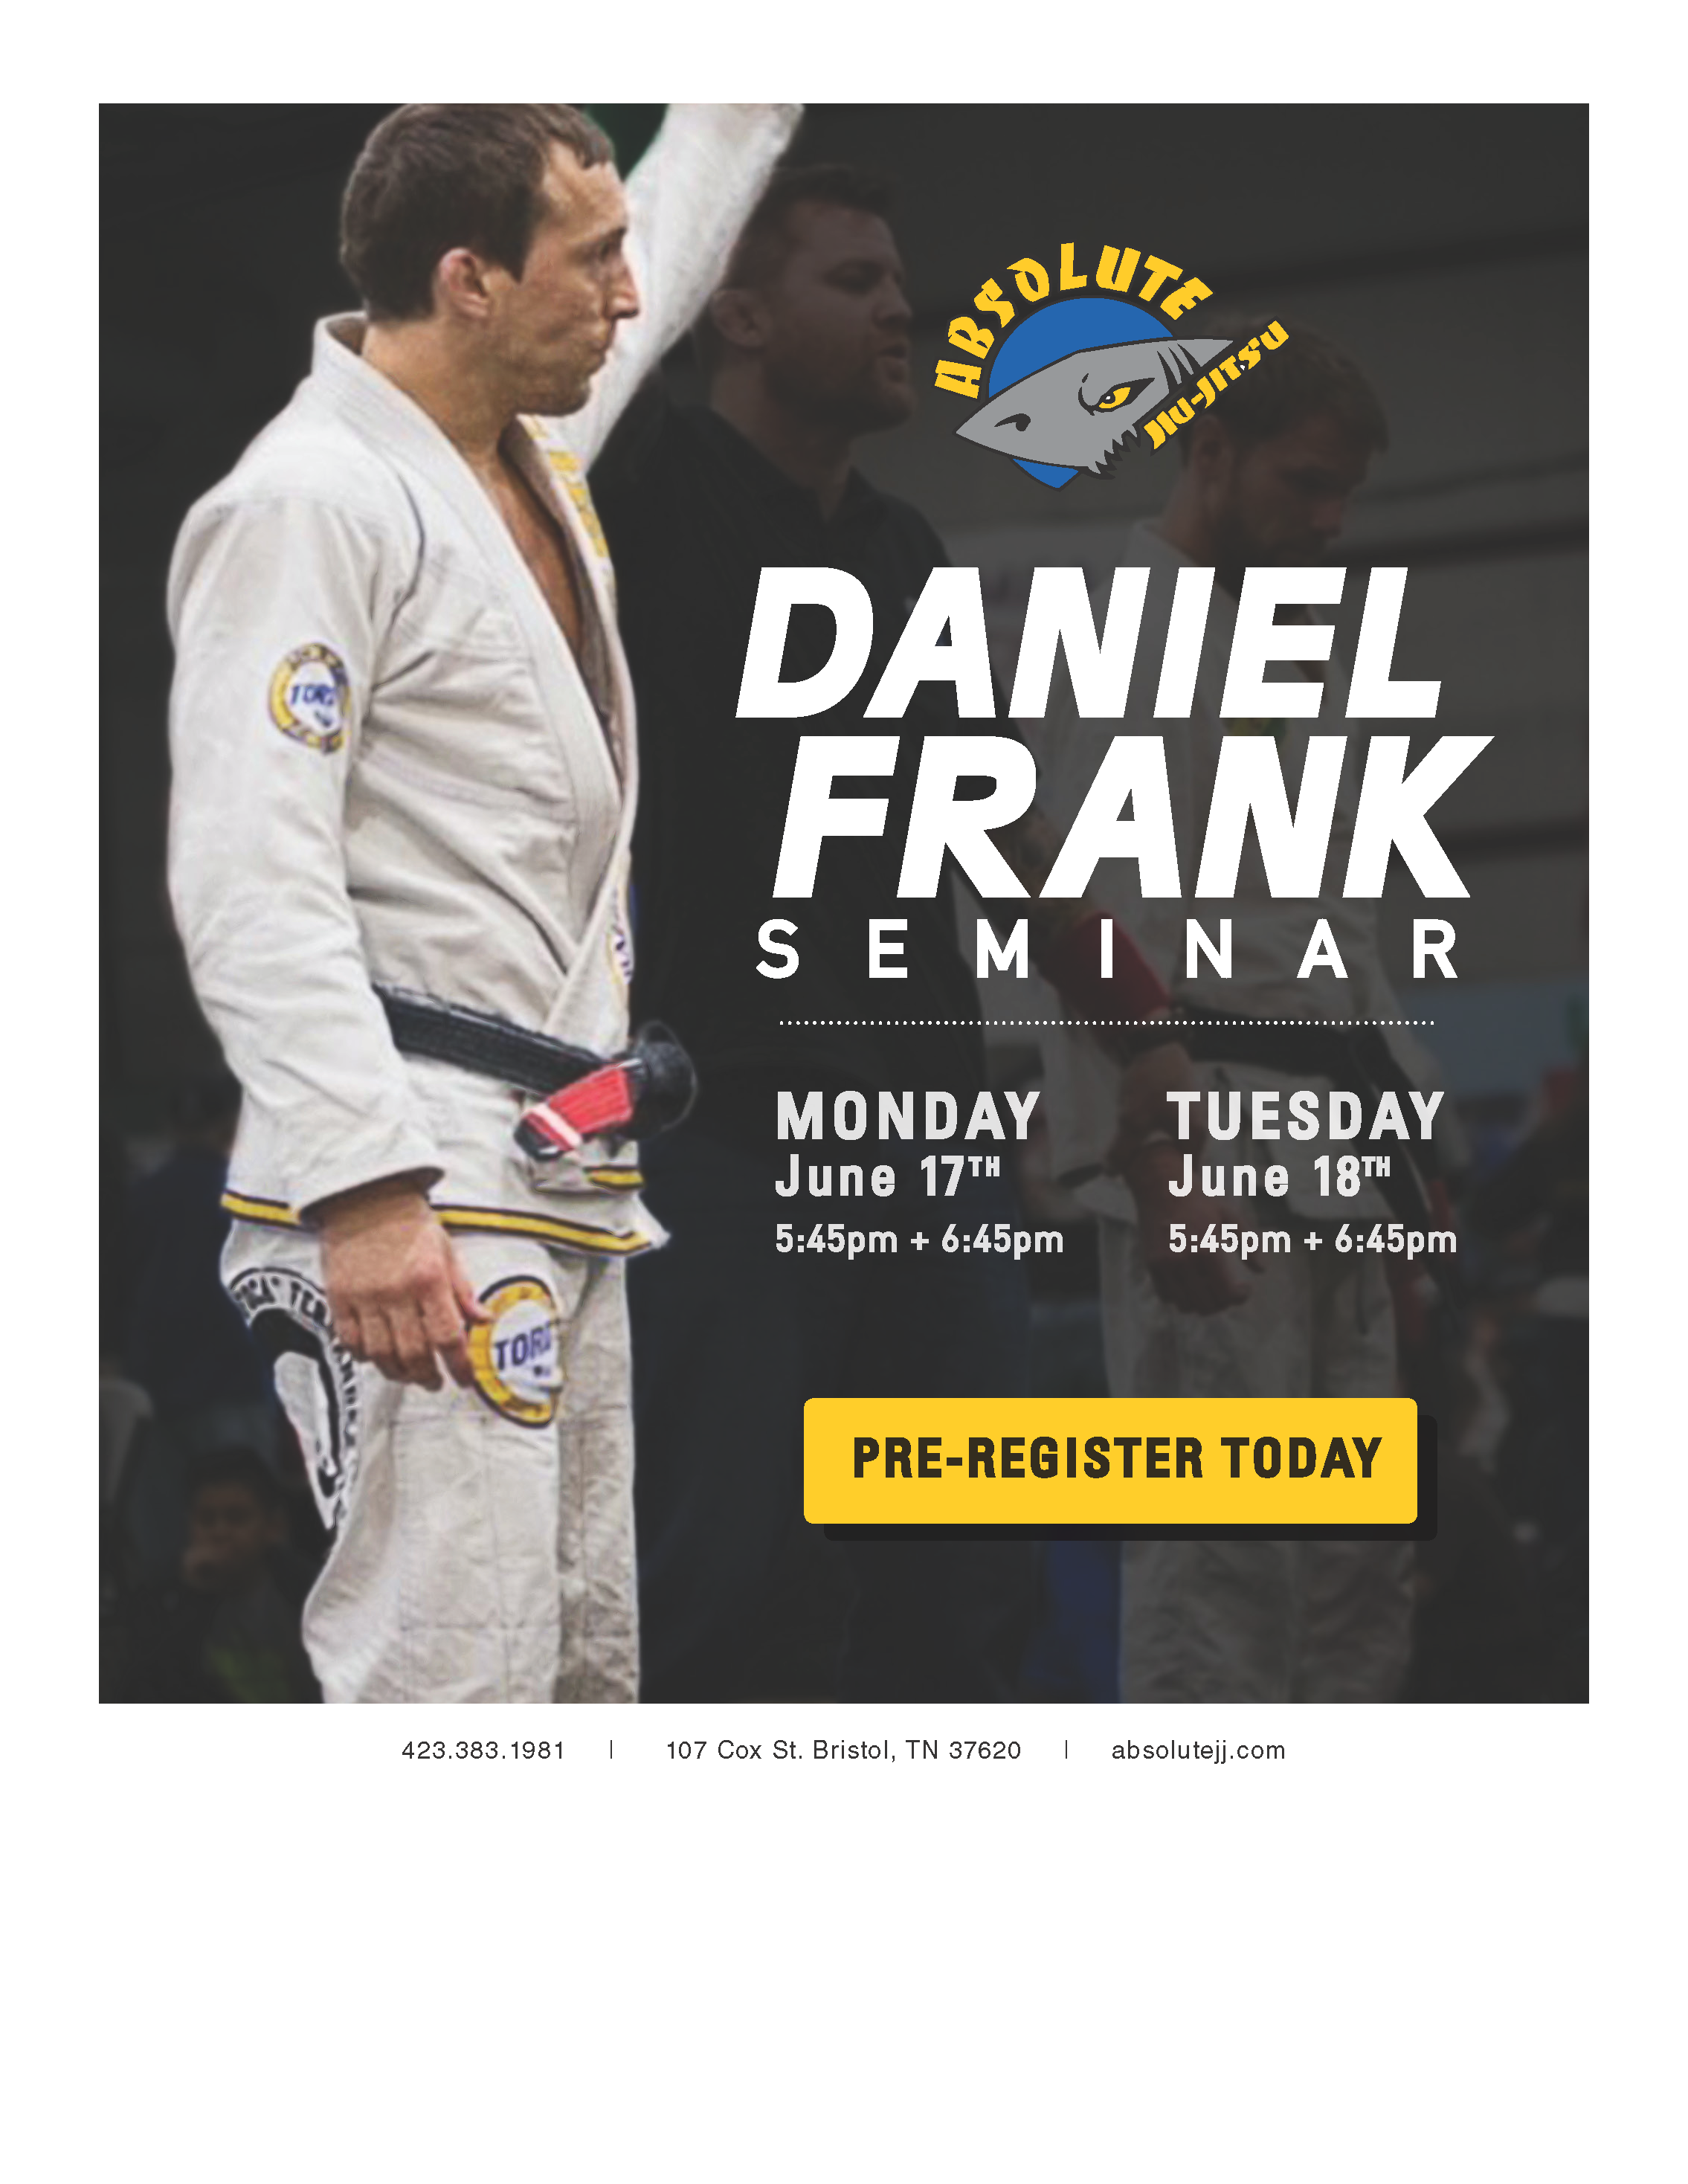 Daniel Frank Seminar